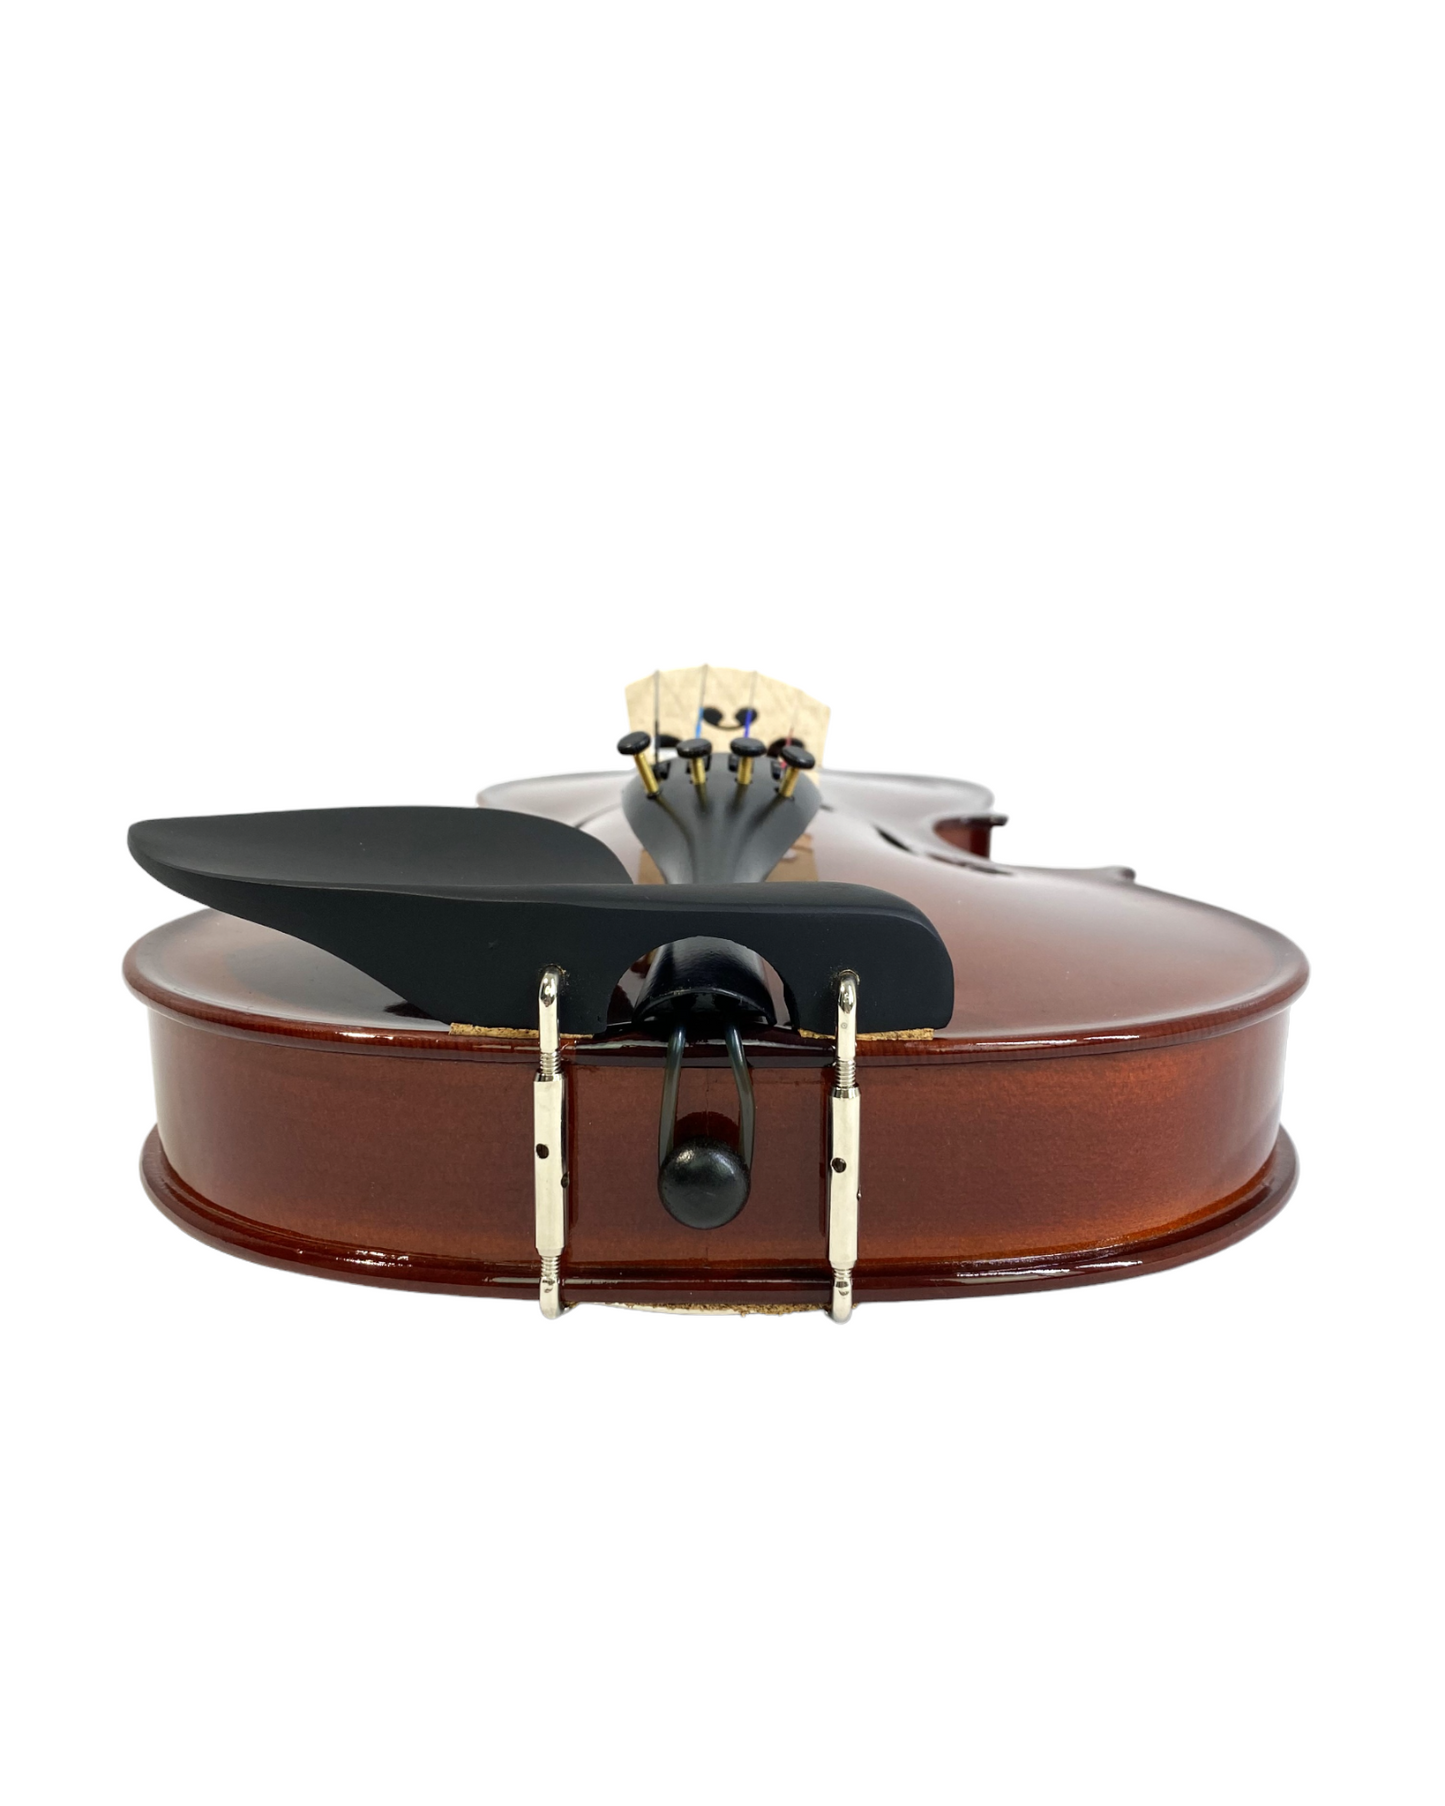 Caraya MV001 4/4-1/16 size Violin outfit w/Extra strings, Foam Hard Case, Bow, Rosin